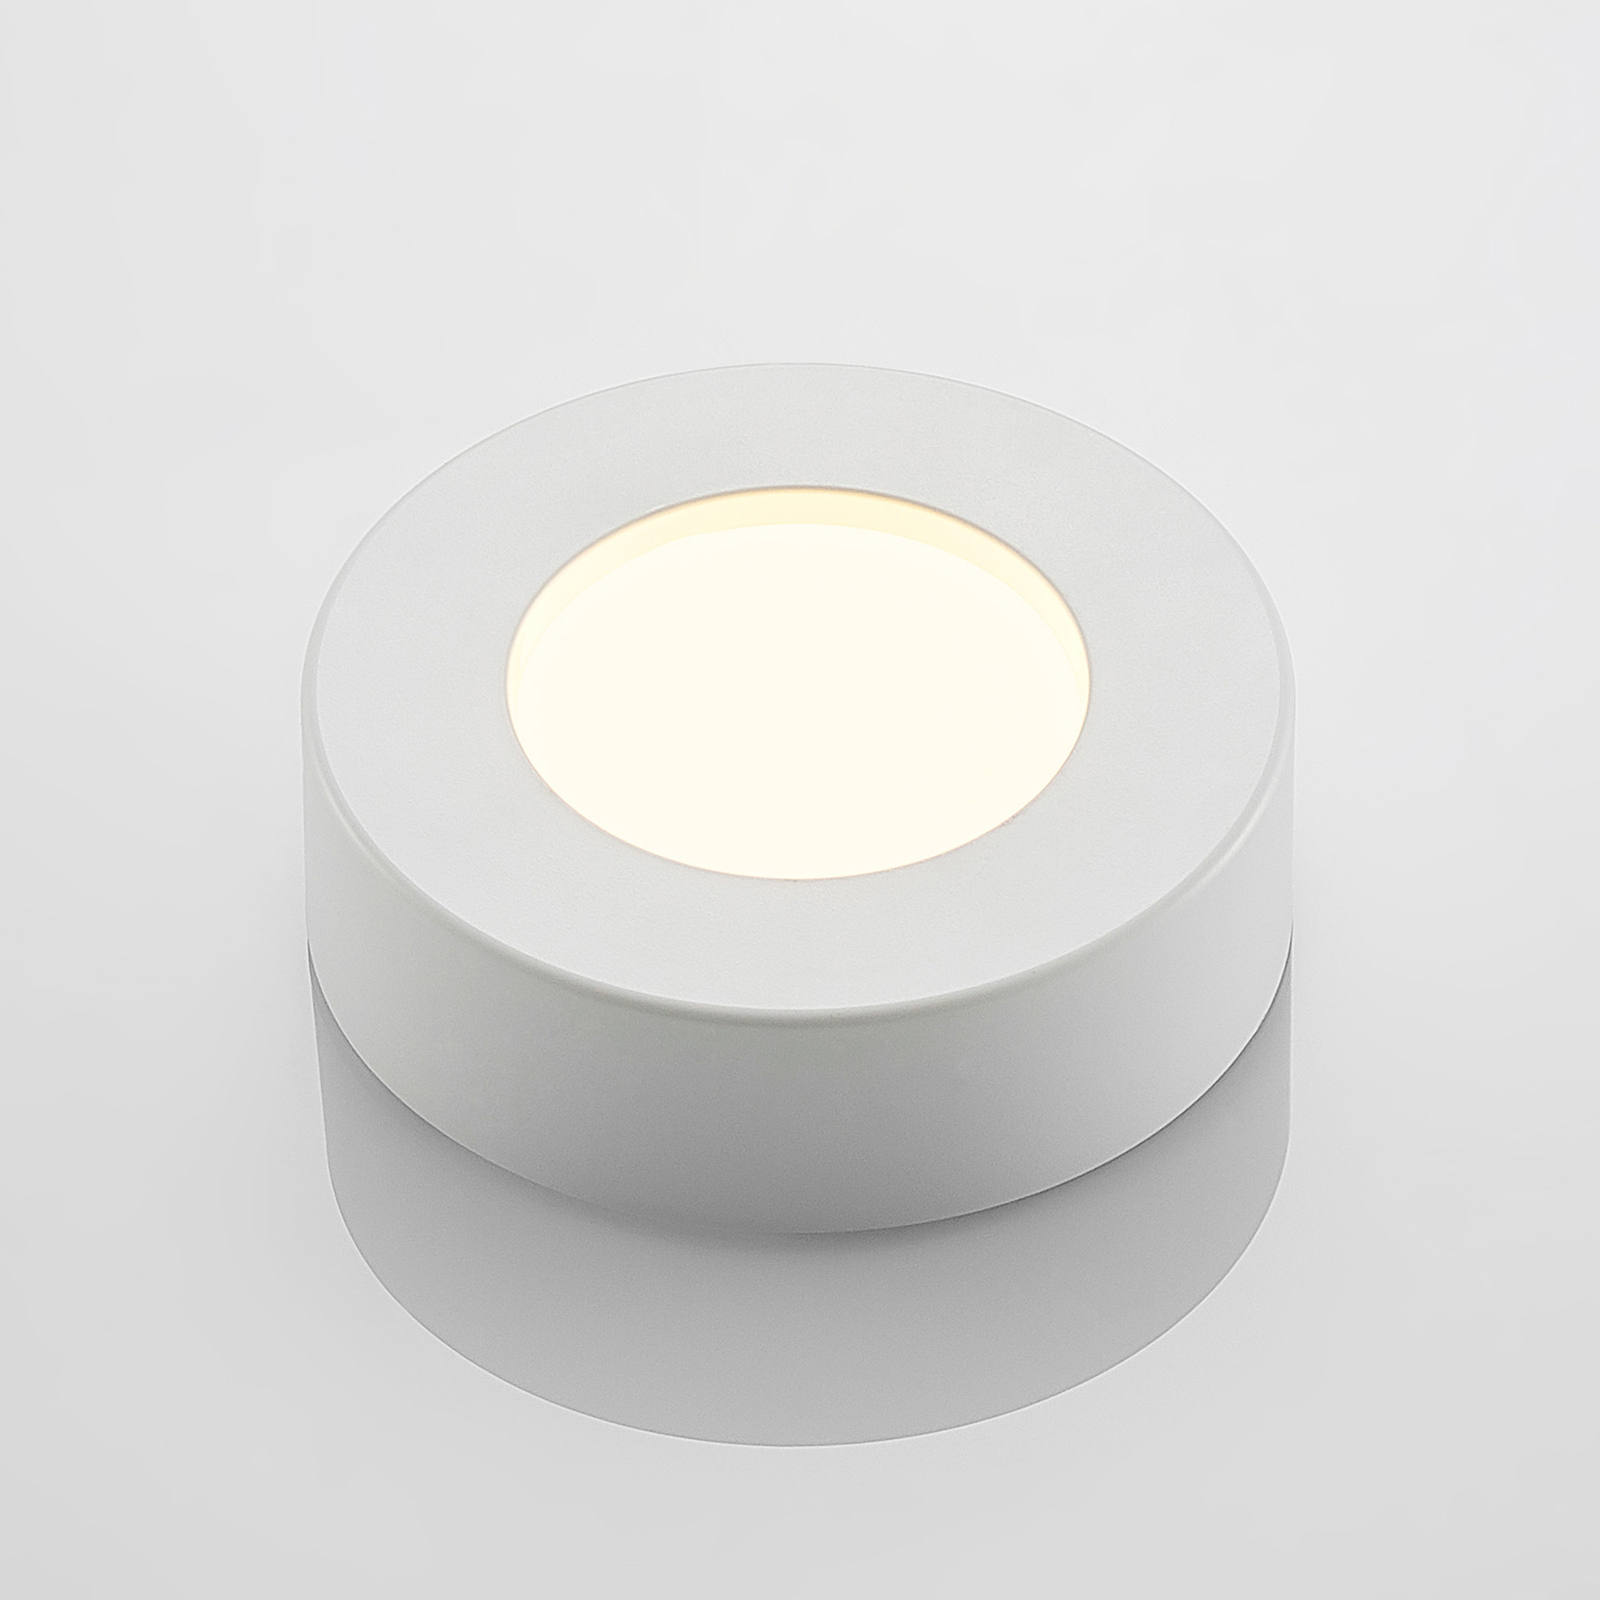 Prios Edwina plafonnier LED, blanc, 12,2 cm